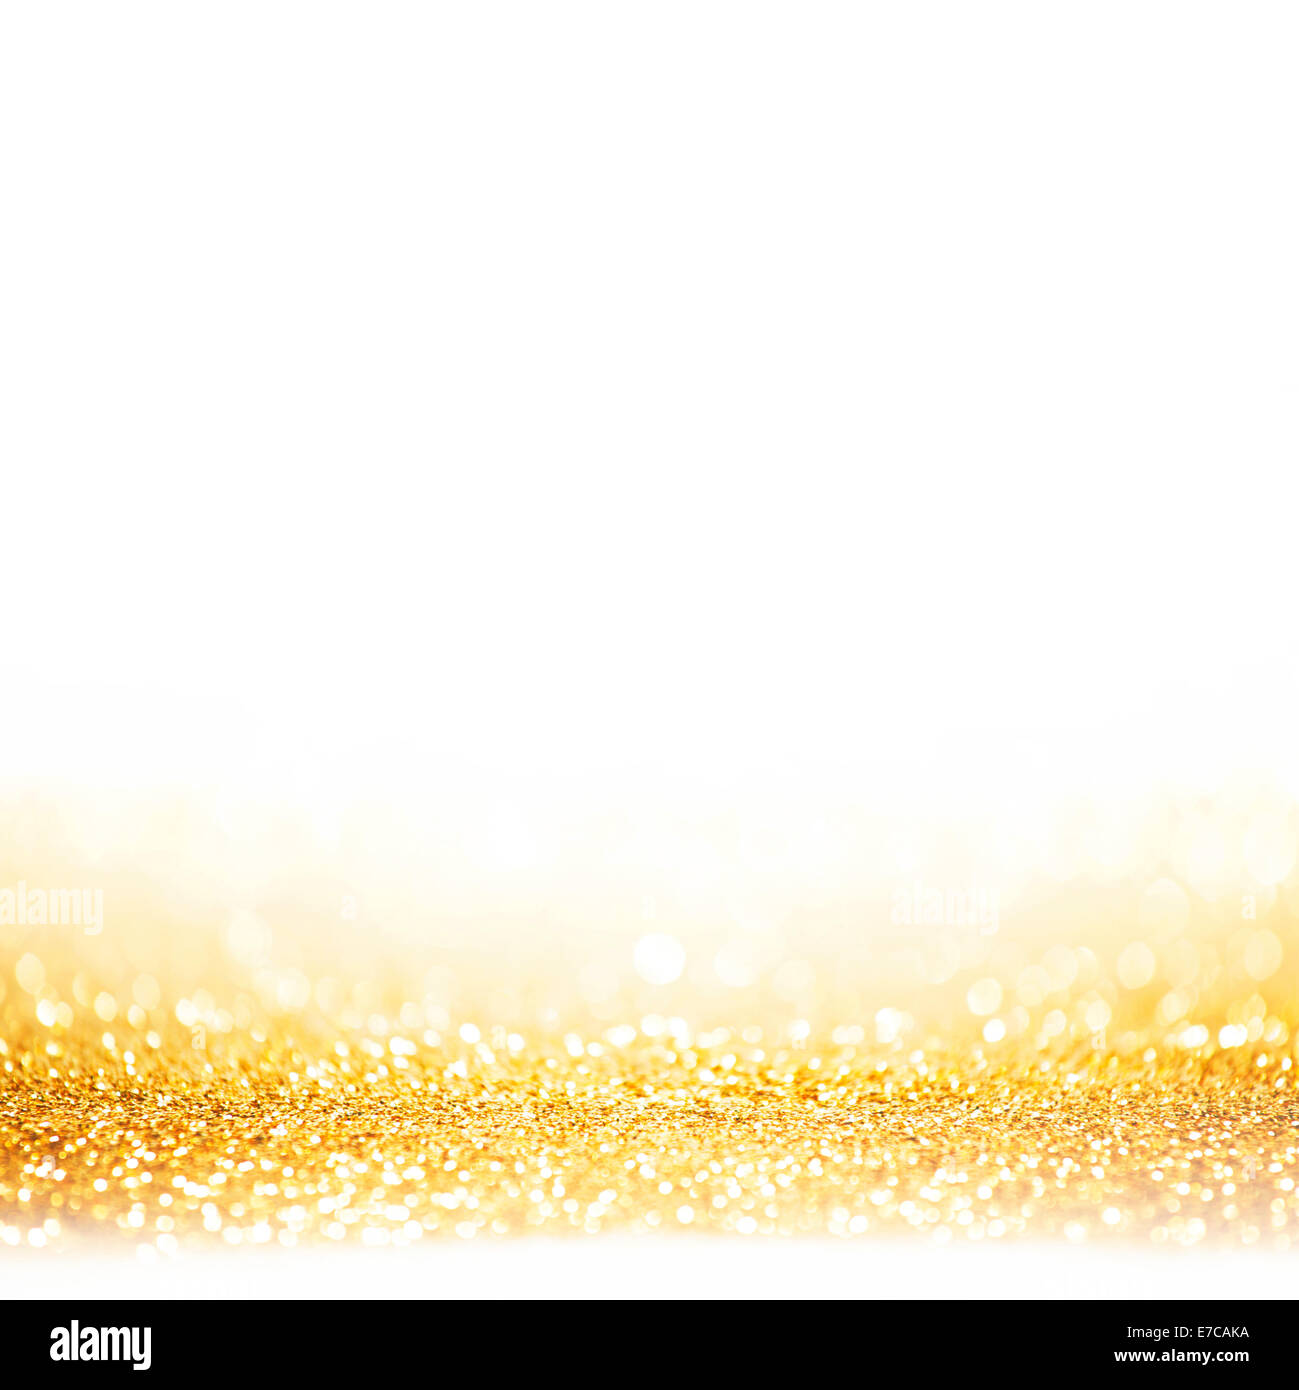 Golden festive glitter background with defocused lights Stock Photo